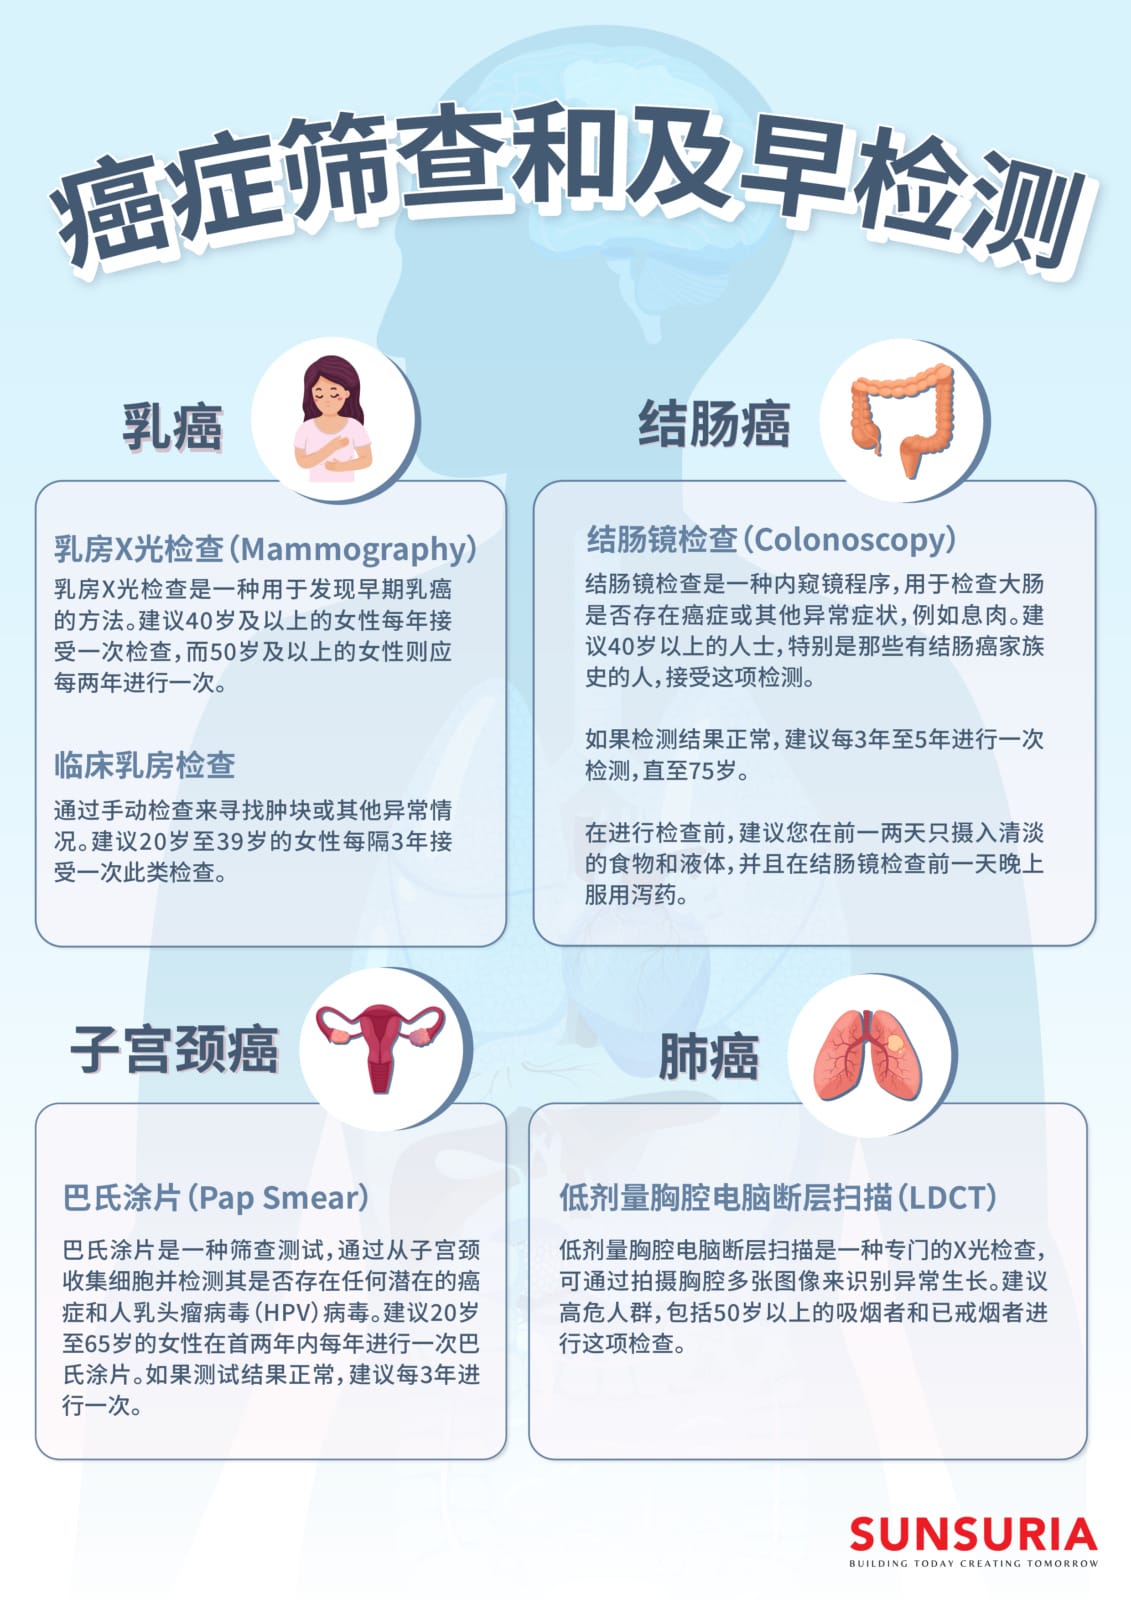 Infographic Types of screening methods Chinese